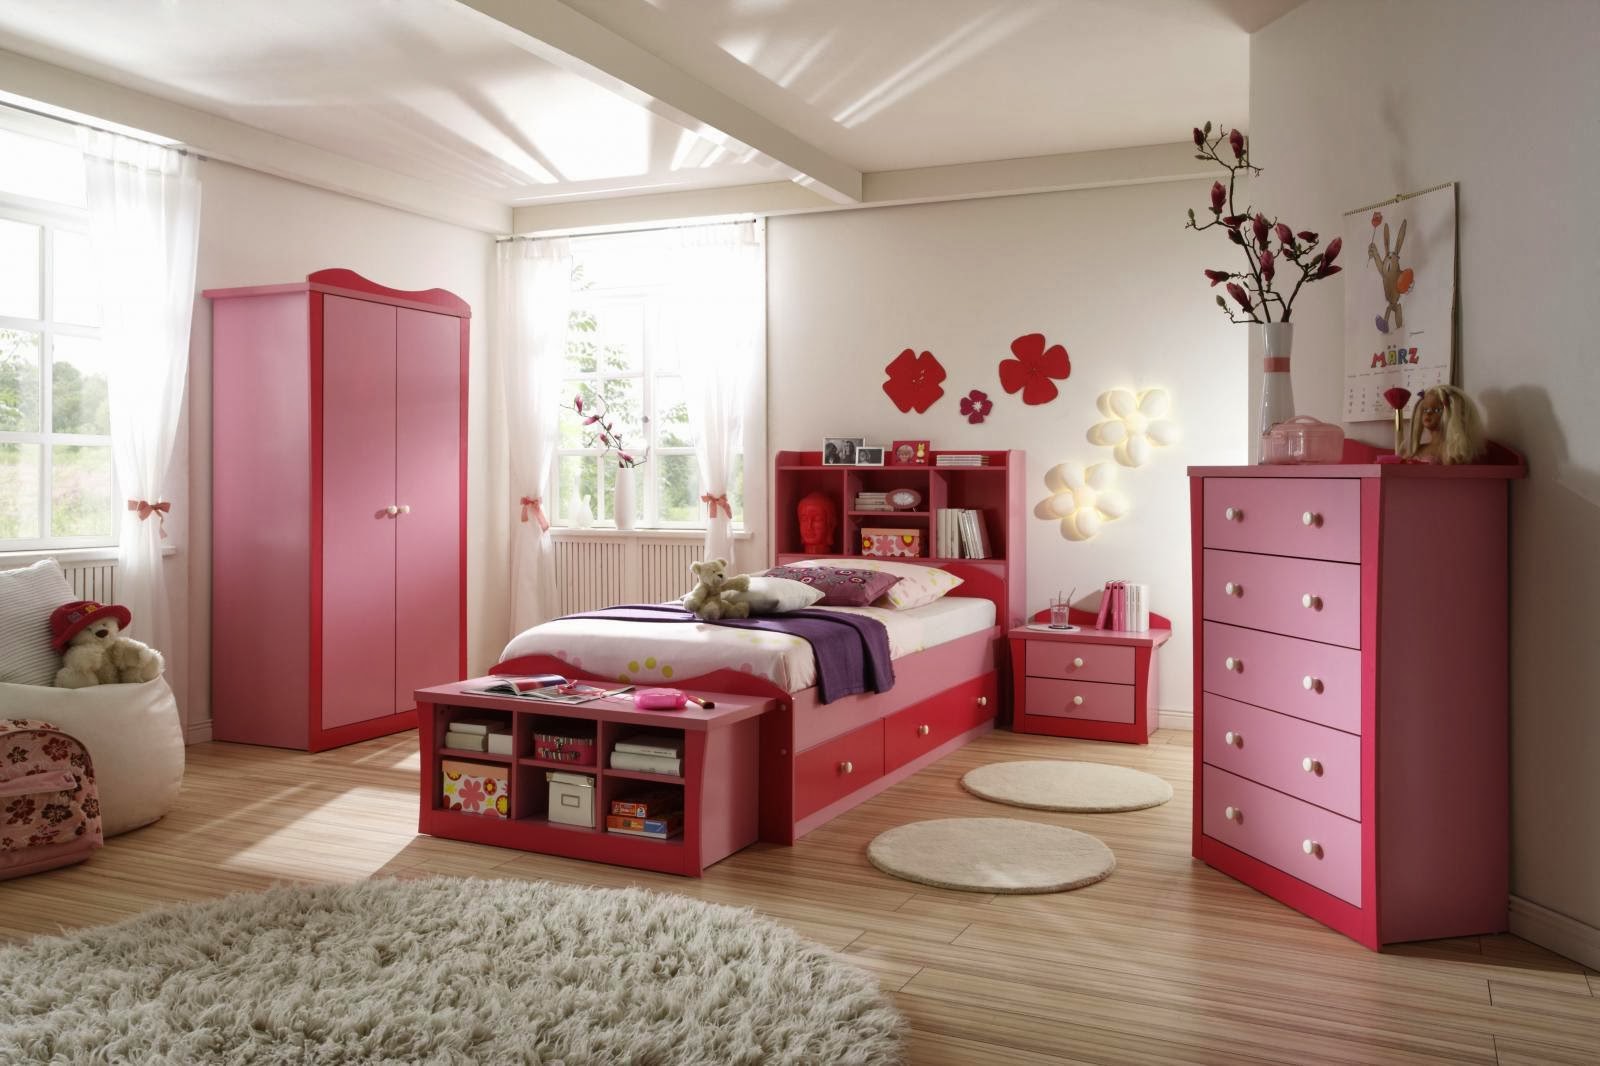 Home iDecoratingi Interior iDesigni iIdeasi Pink iBeddingi for a 